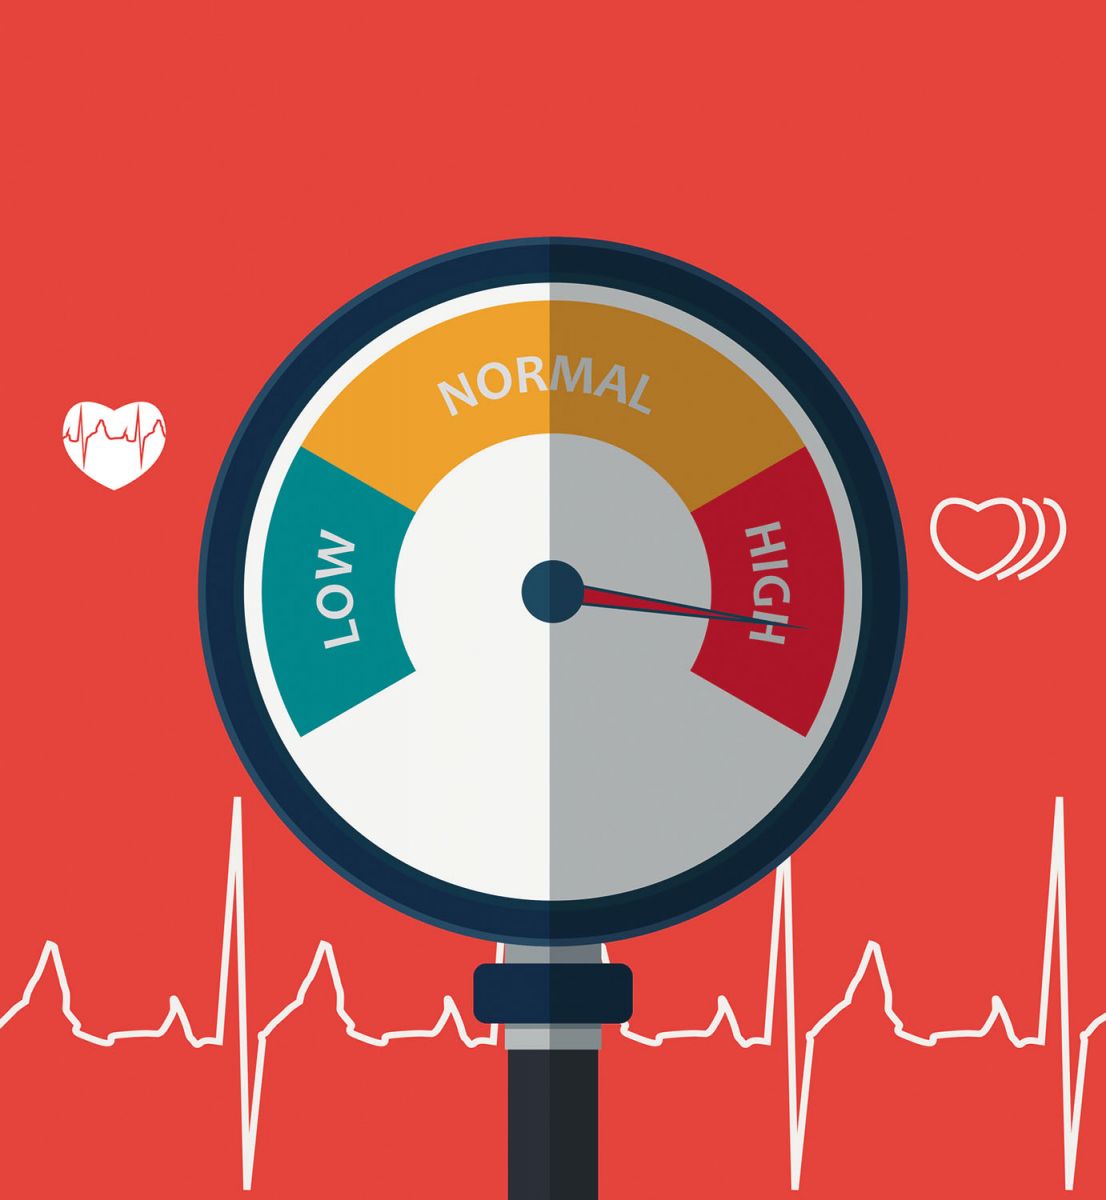 what is range of high blood pressure